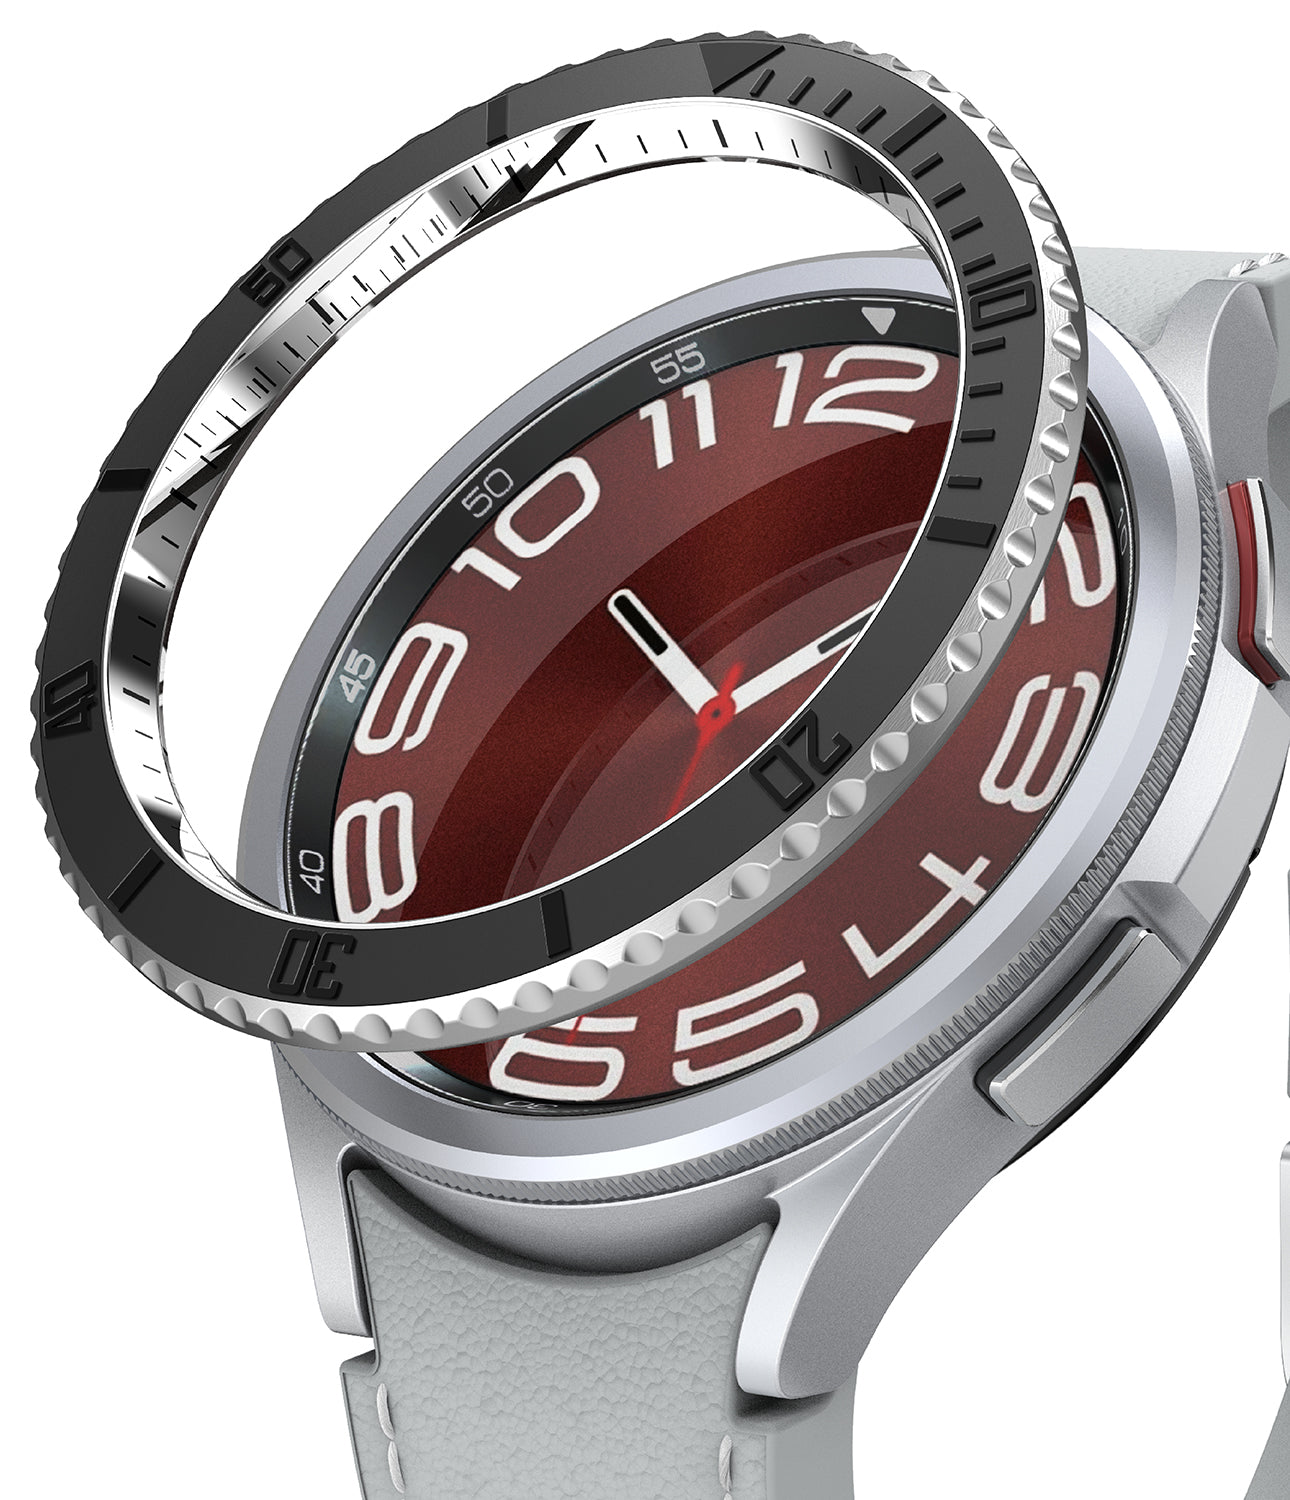 Galaxy Watch 6 Classic 47mm | Bezel Styling 47-96-Black